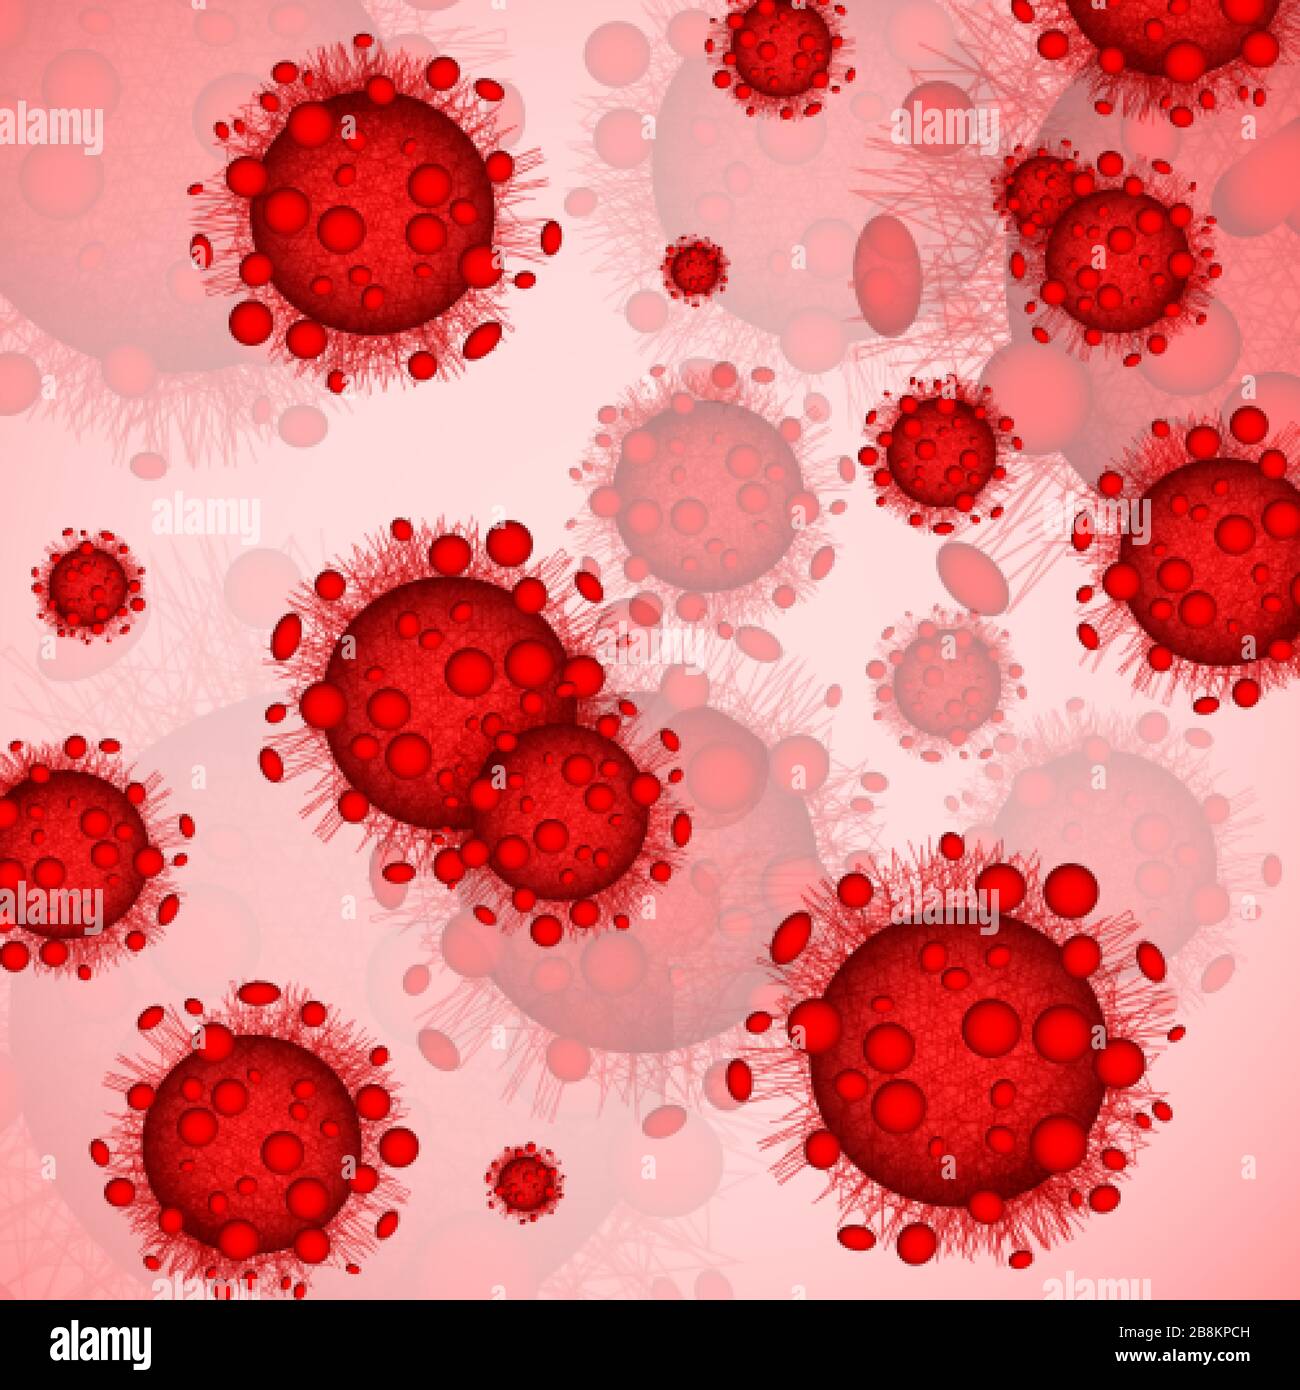 Red Corona Virus Infection. Medicine warning background. Dangerous disease symptoms. Vector illustration Stock Vector